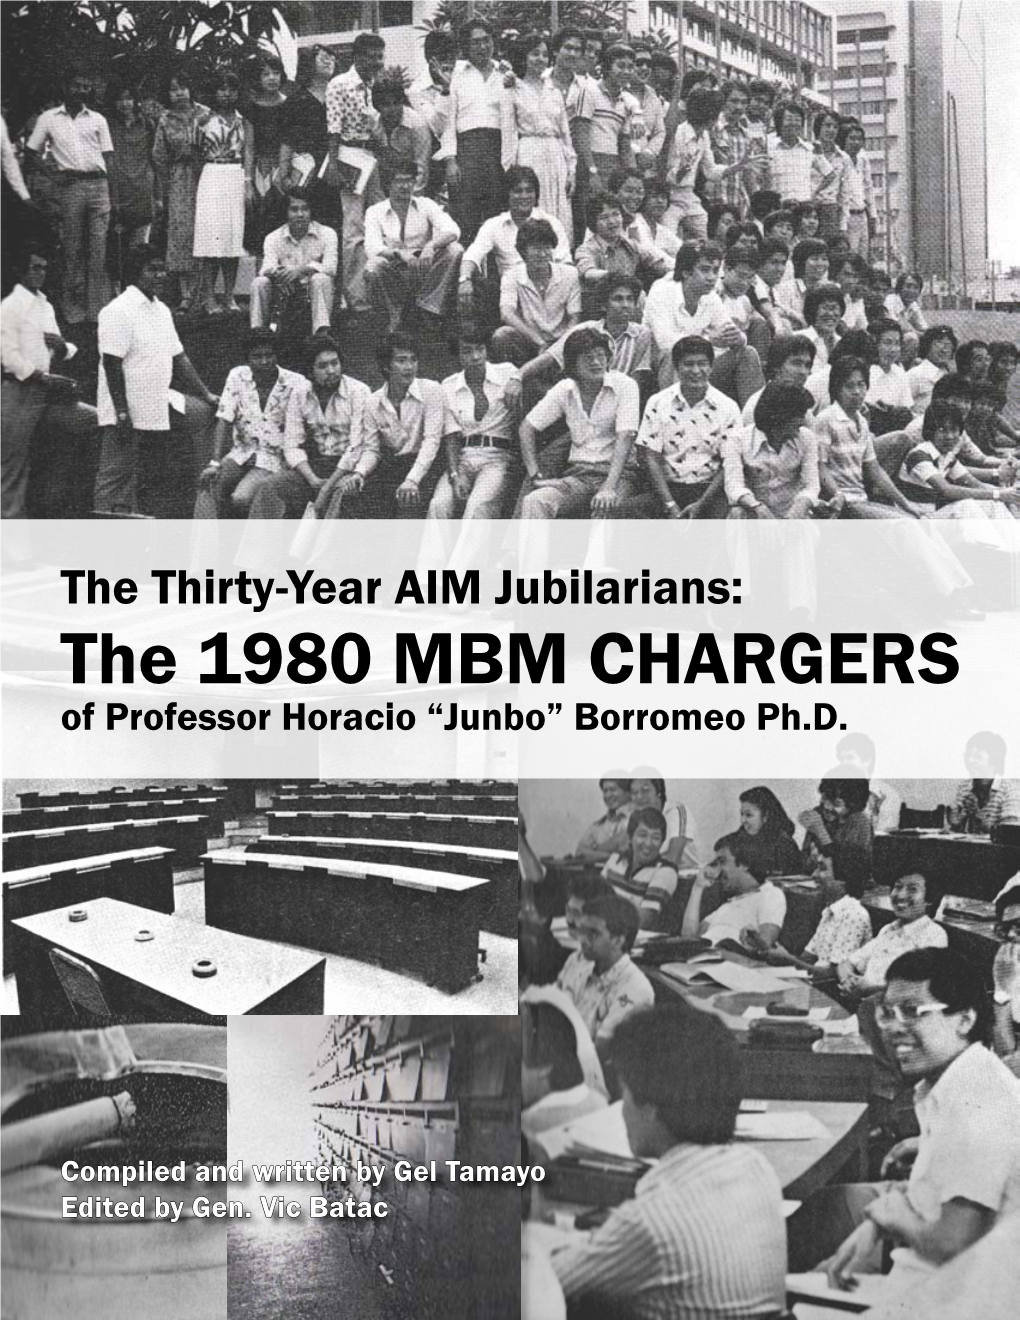 The 1980 MBM CHARGERS of Professor Horacio “Junbo” Borromeo Ph.D